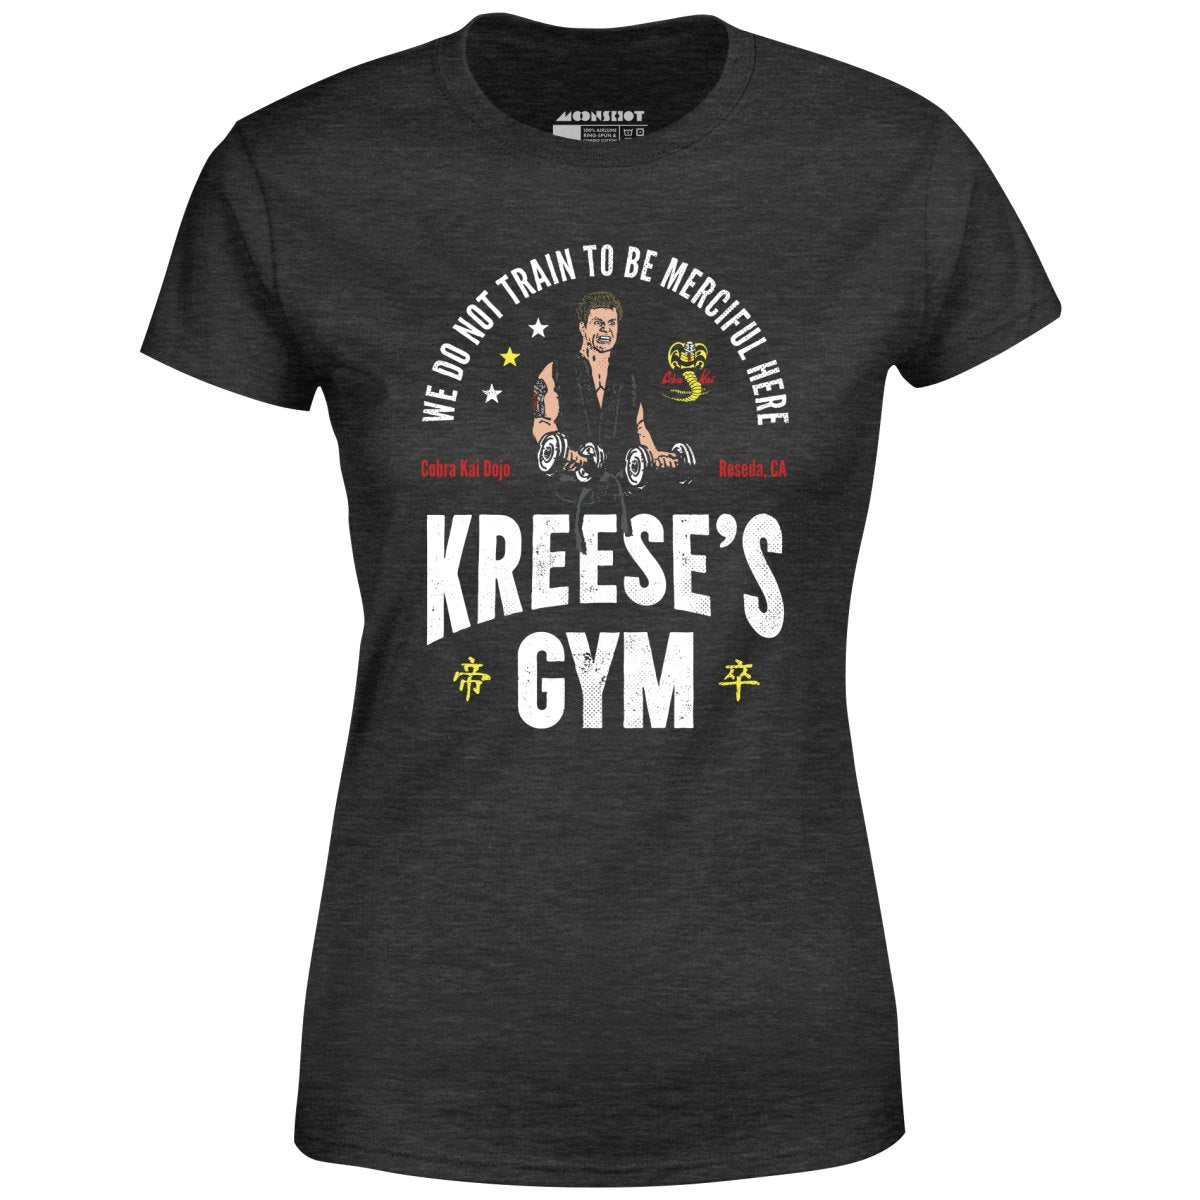 Kreese's Gym - Women's T-Shirt